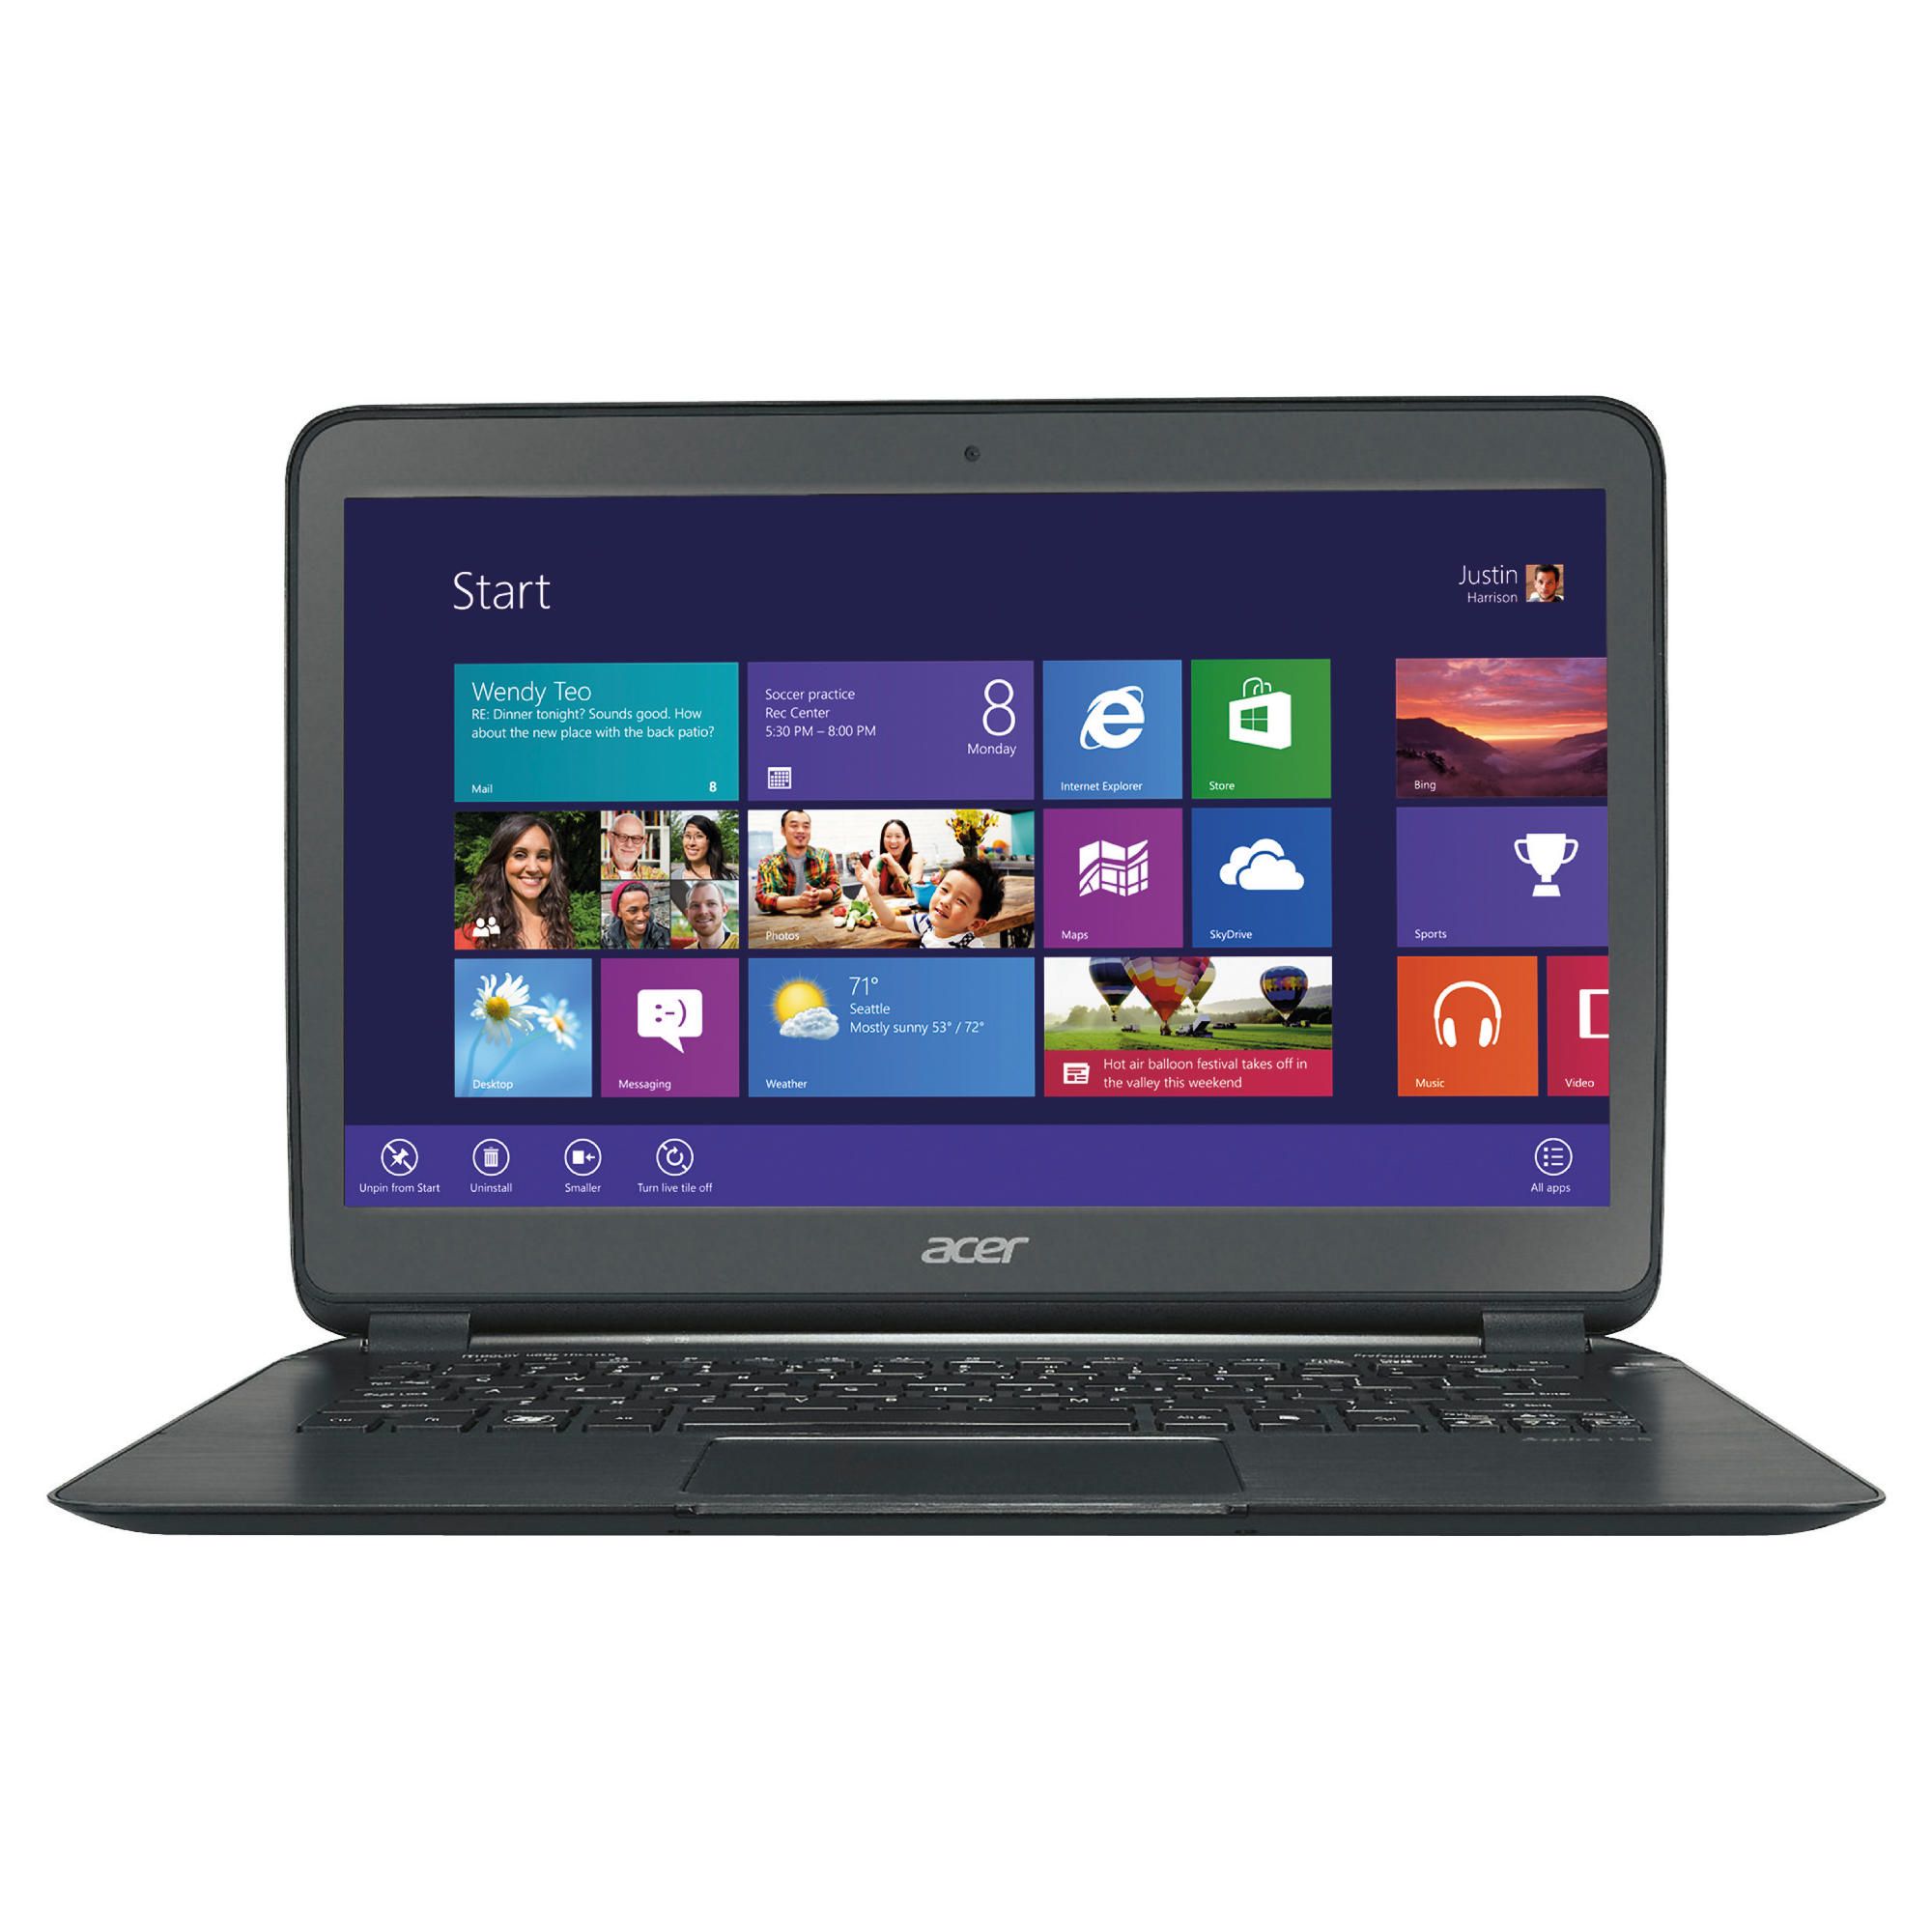 Acer S5-391 15.6-inch laptop, Intel Core i5, 4GB RAM, 128GB HDD, Windows 8